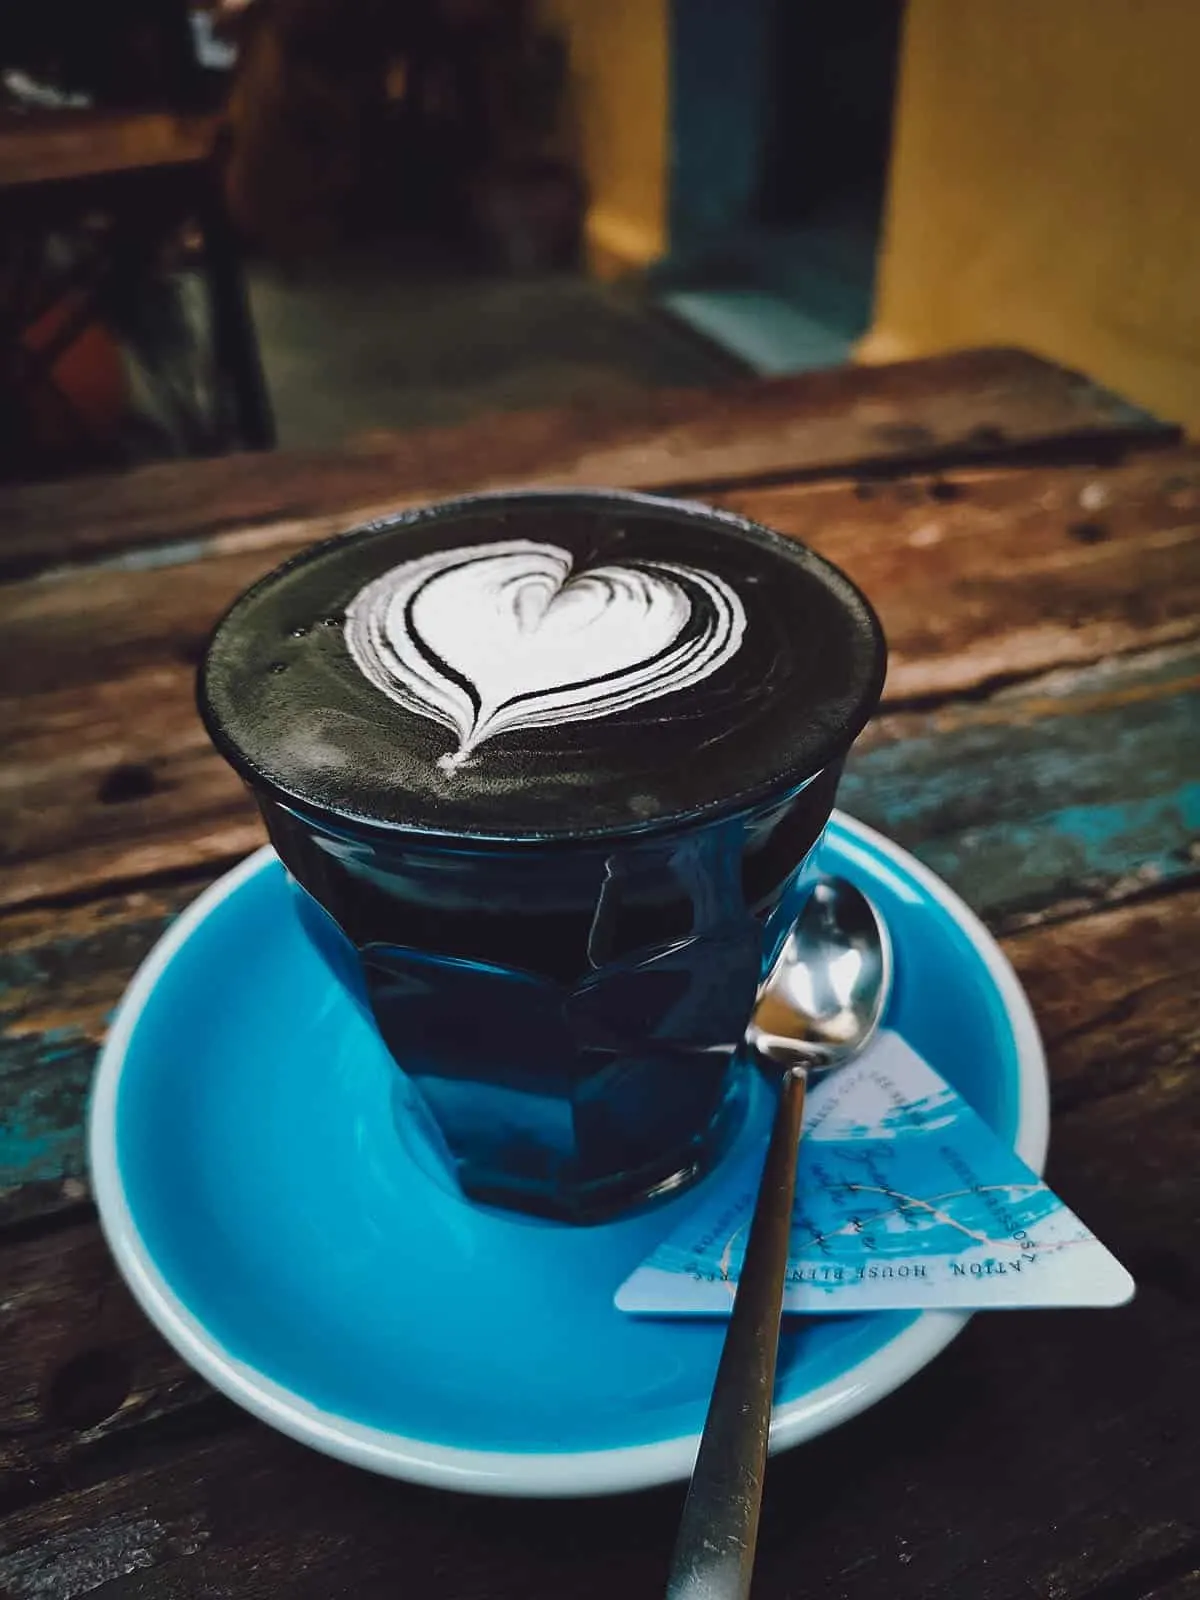 Dark Soul Latte at The Espresso Station in Hoi An, Vietnam